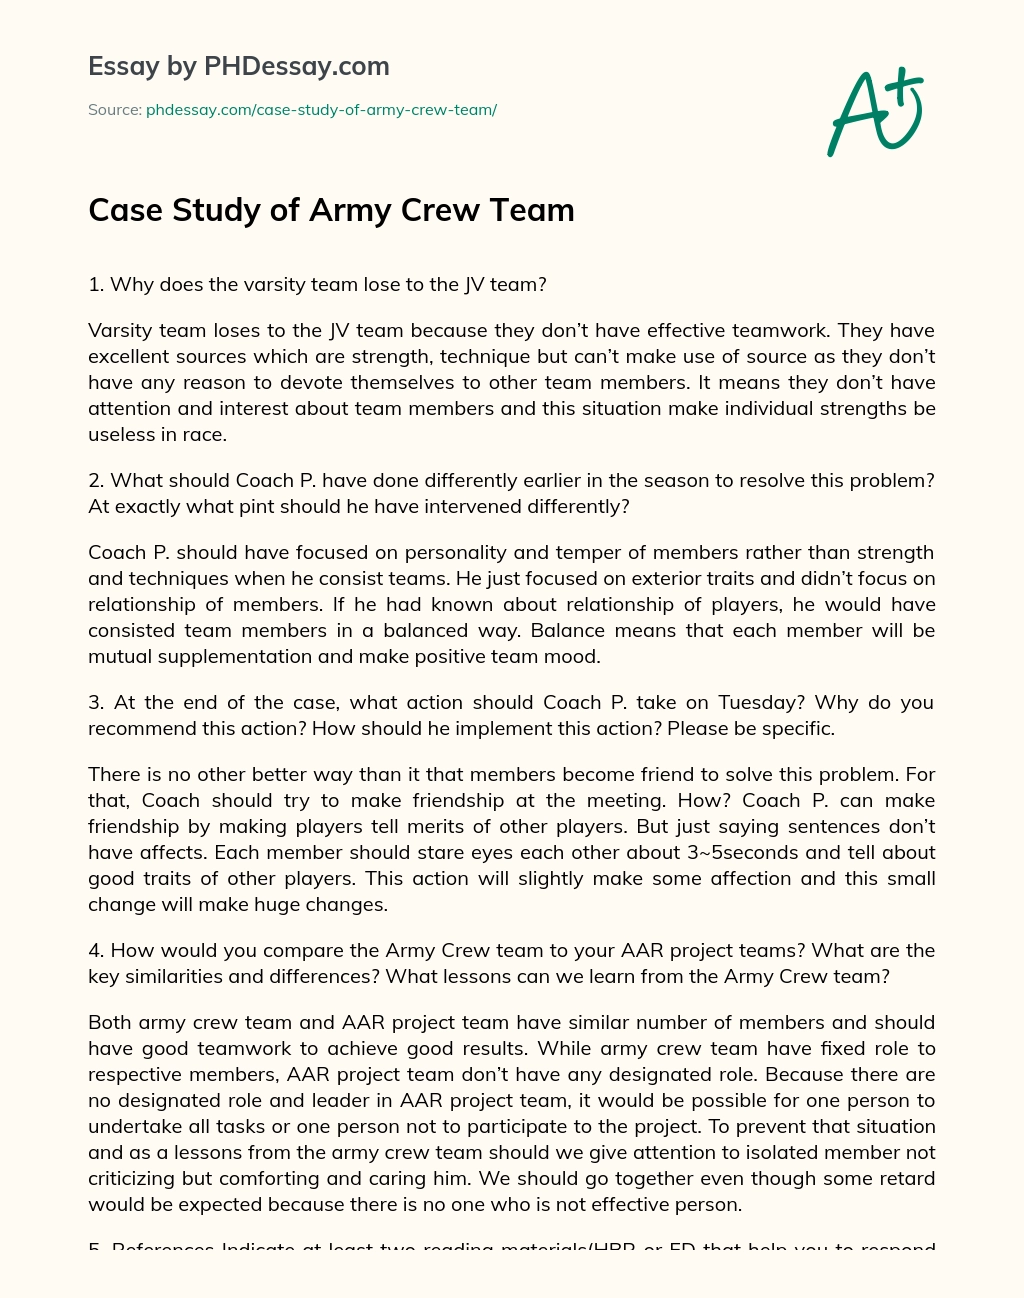 Case Study Of Army Crew Team Phdessay Com